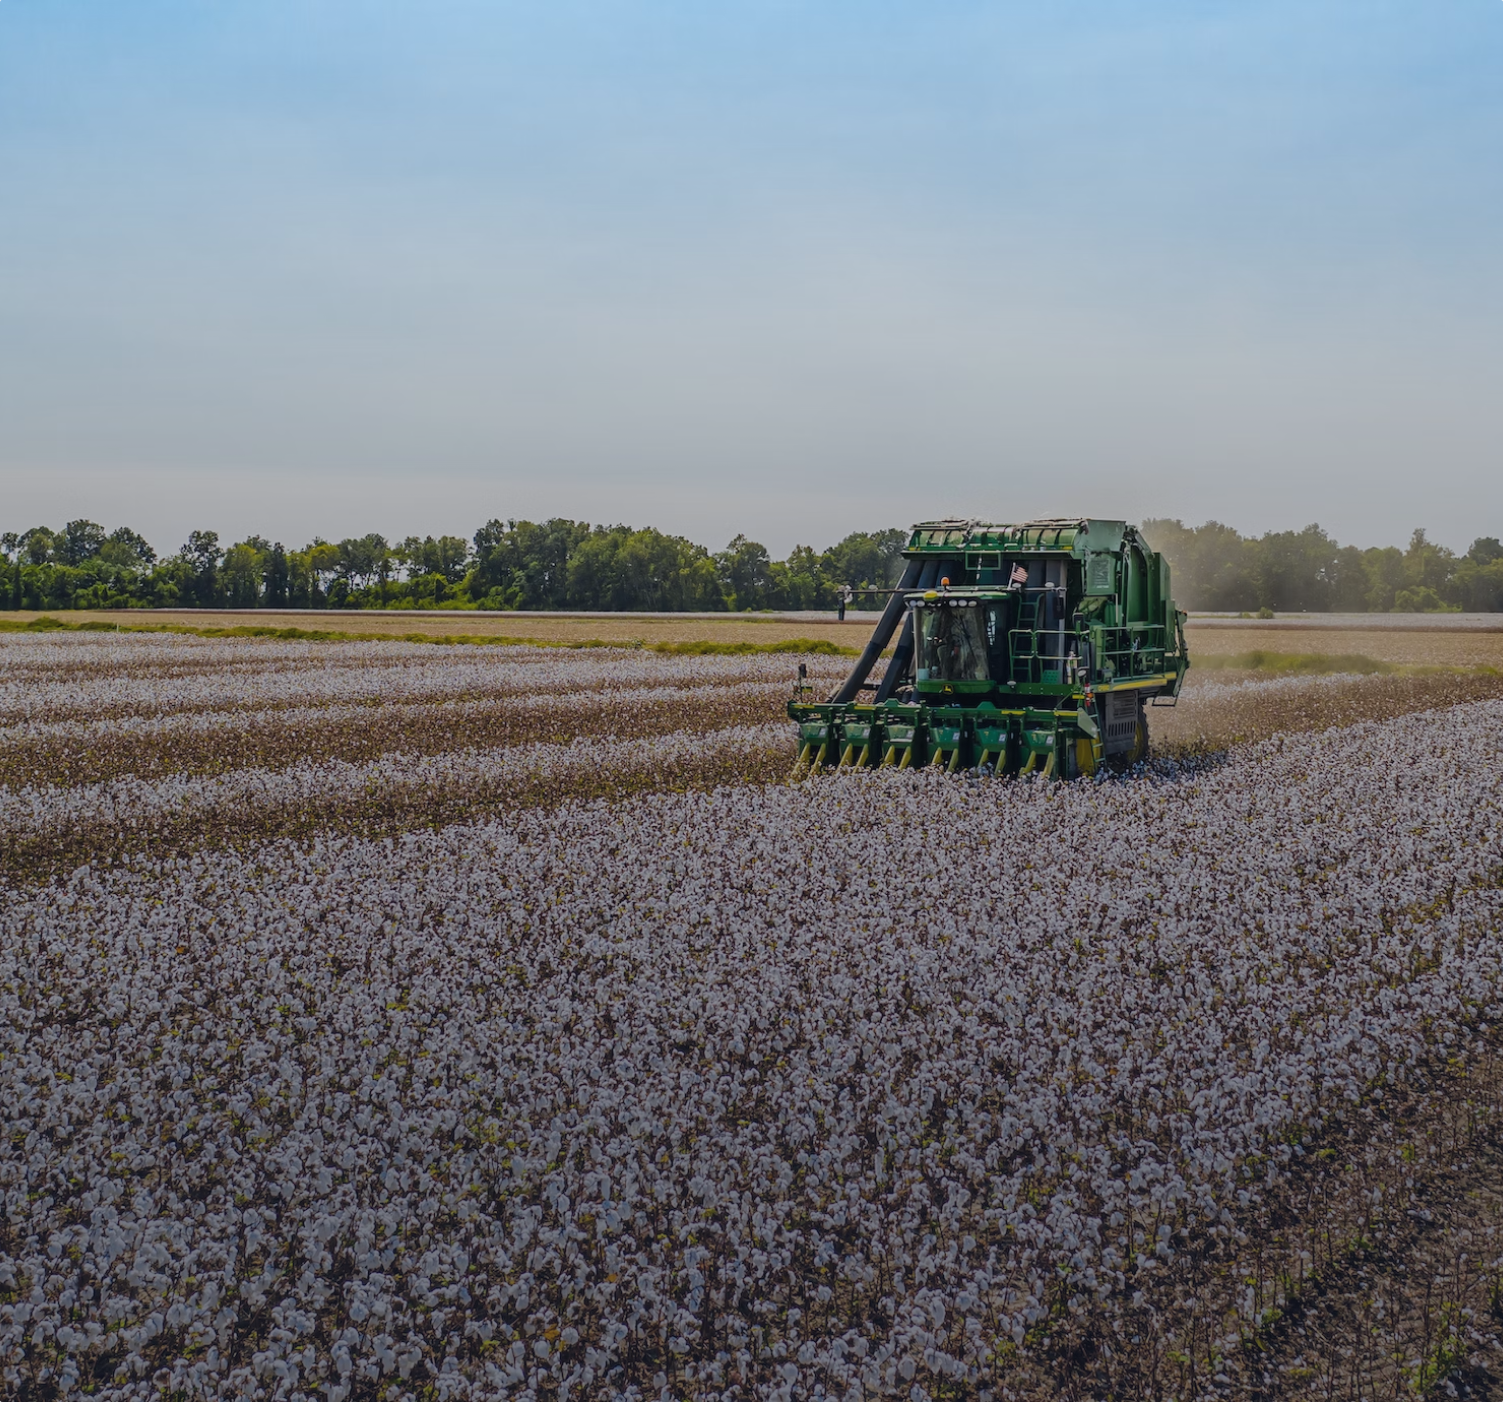 A cotton sorting machine runs through an ethically sourced cotton field.